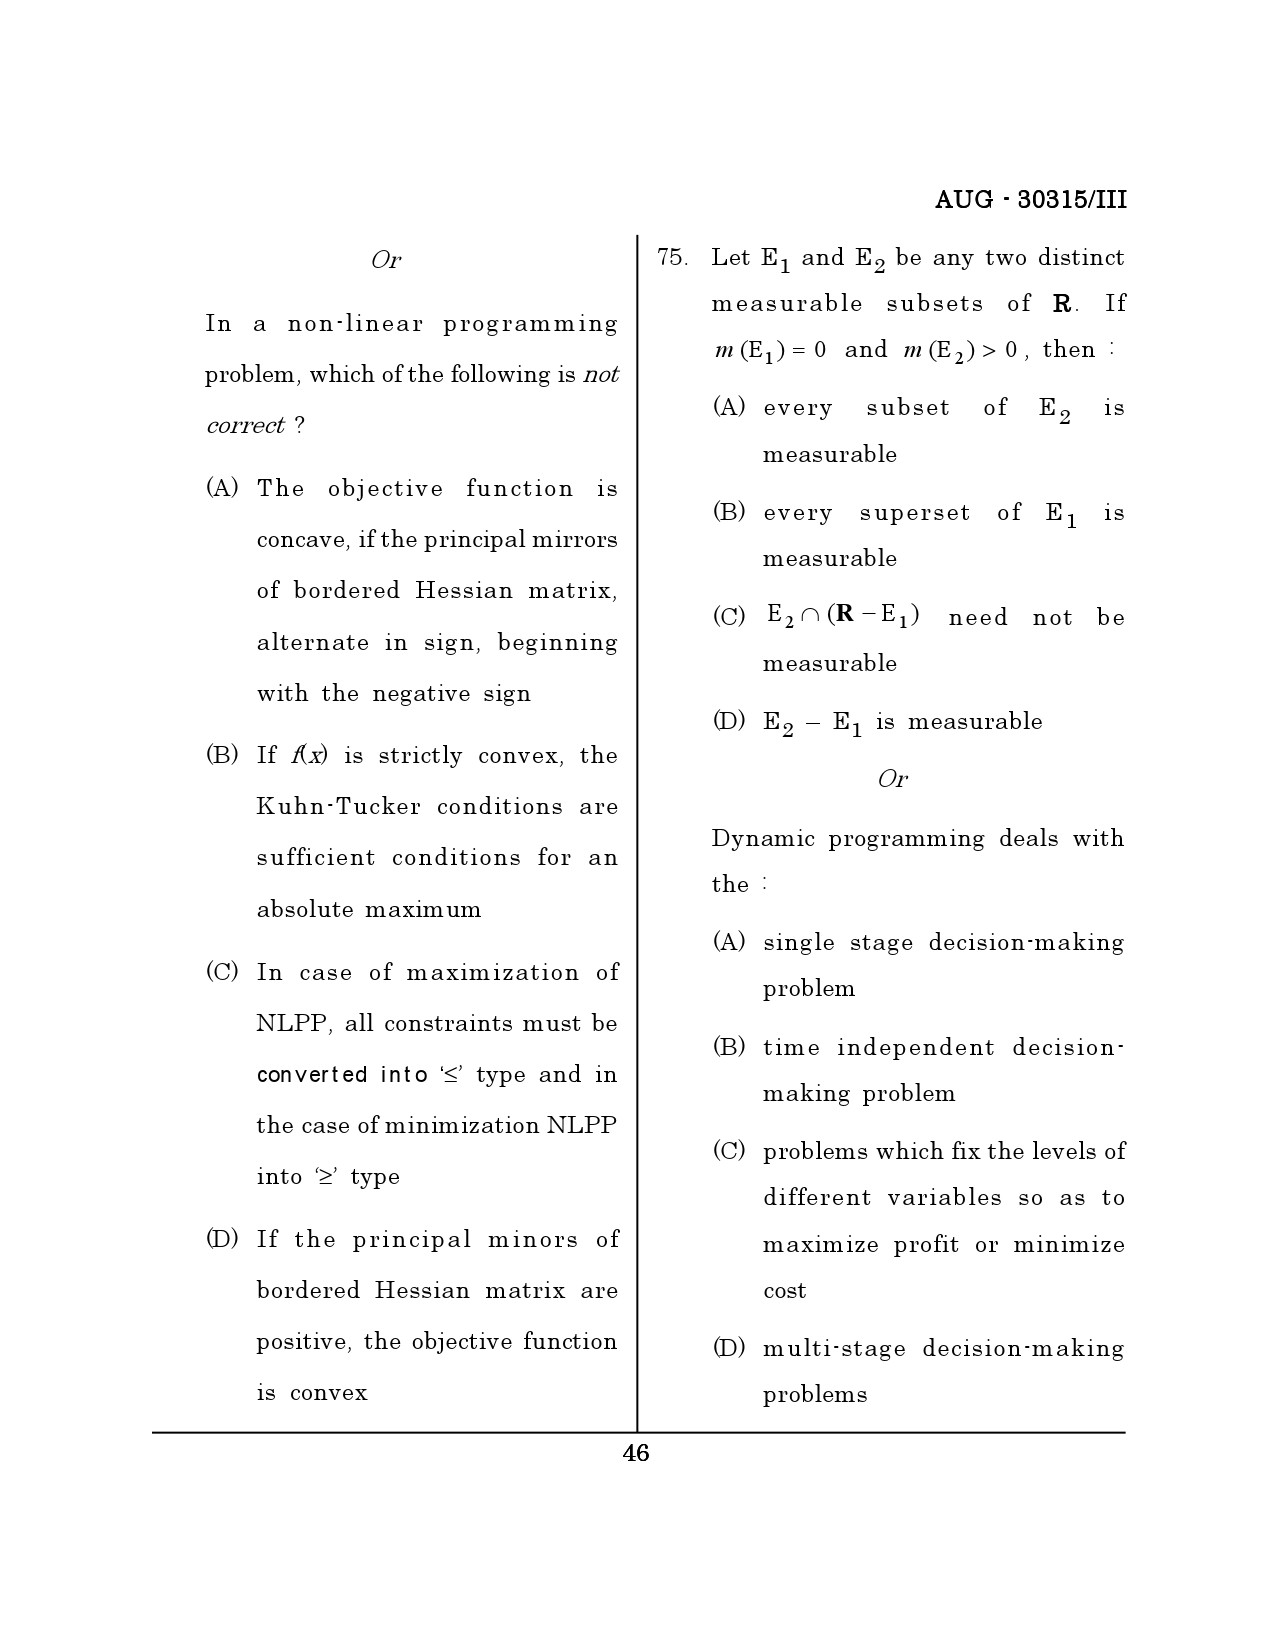 Maharashtra SET Mathematical Sciences Question Paper III August 2015 45